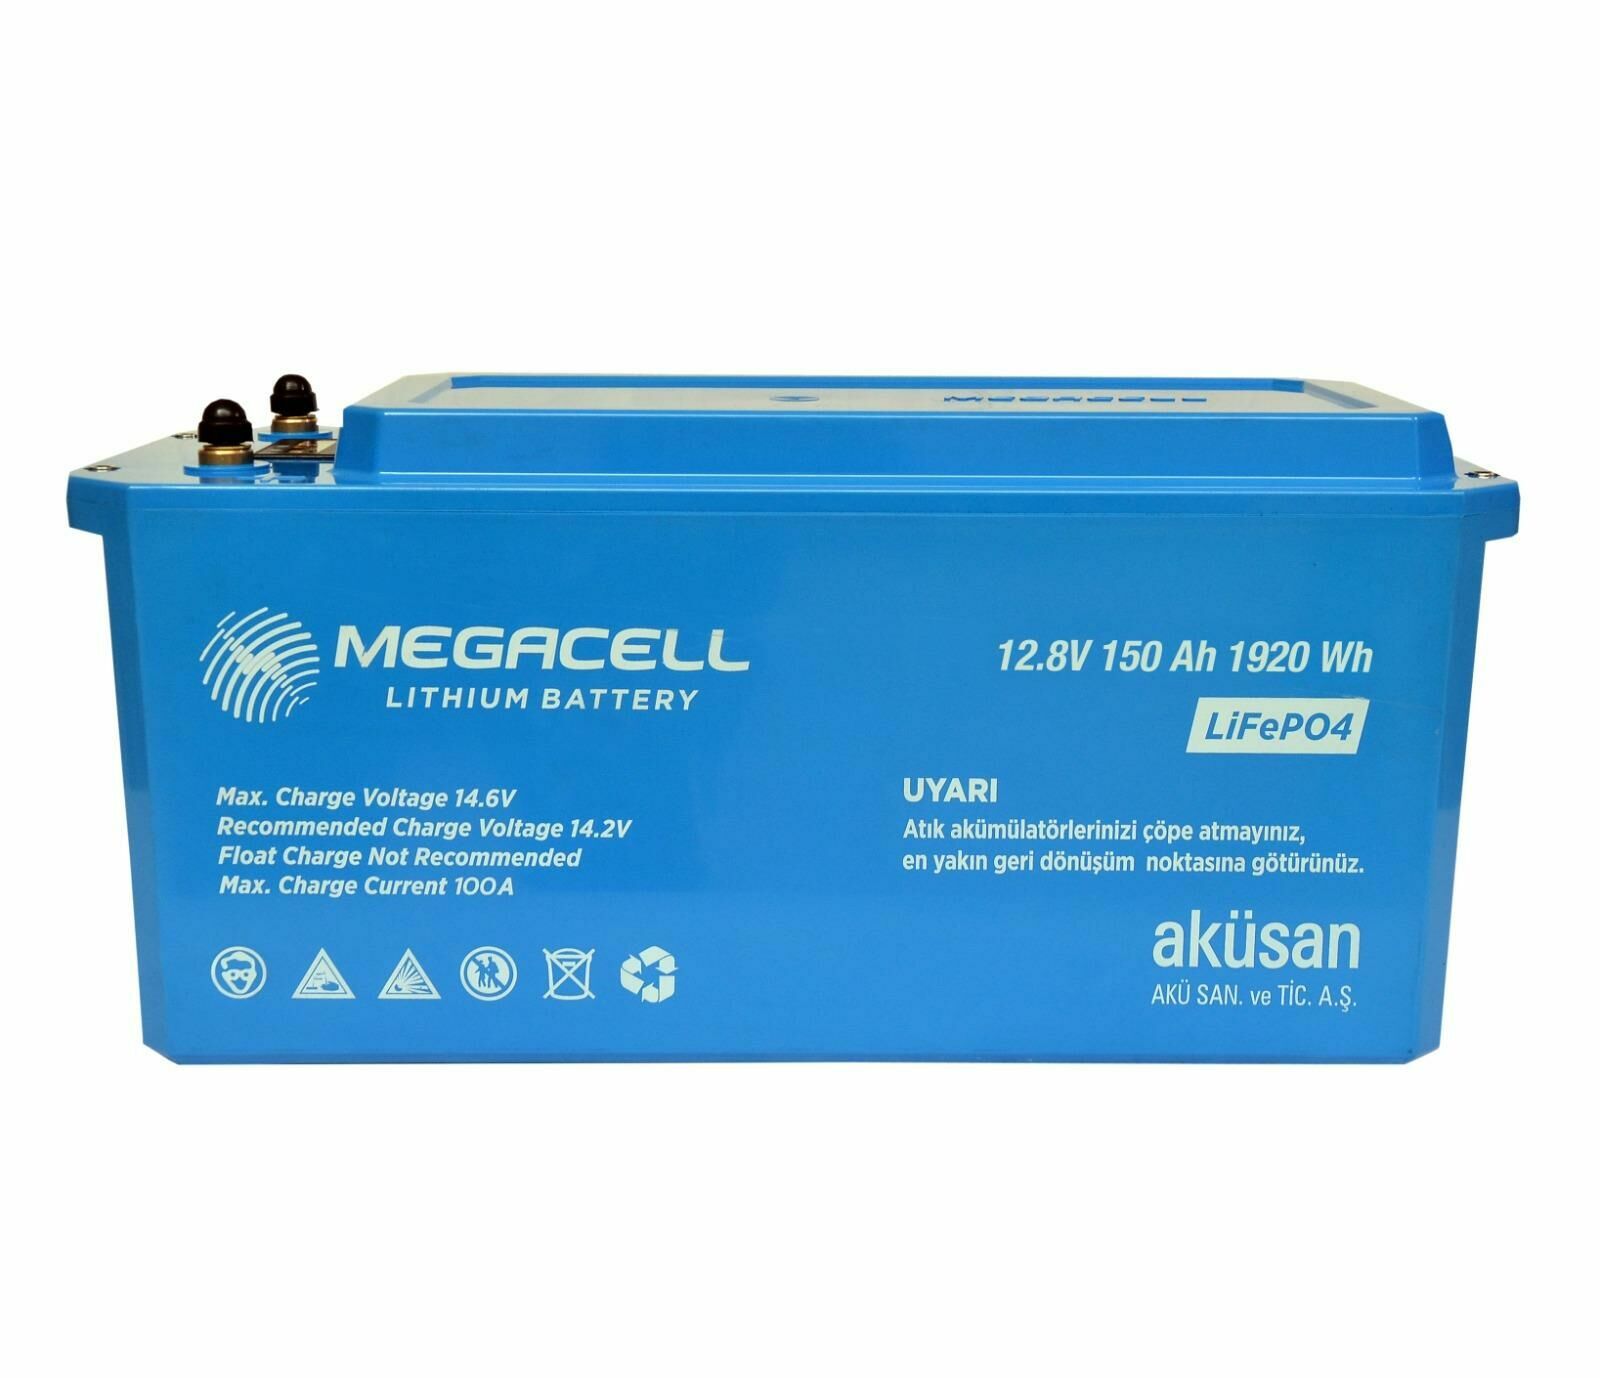 MEGACELL-LiFePO4 12.8V 150 Ah